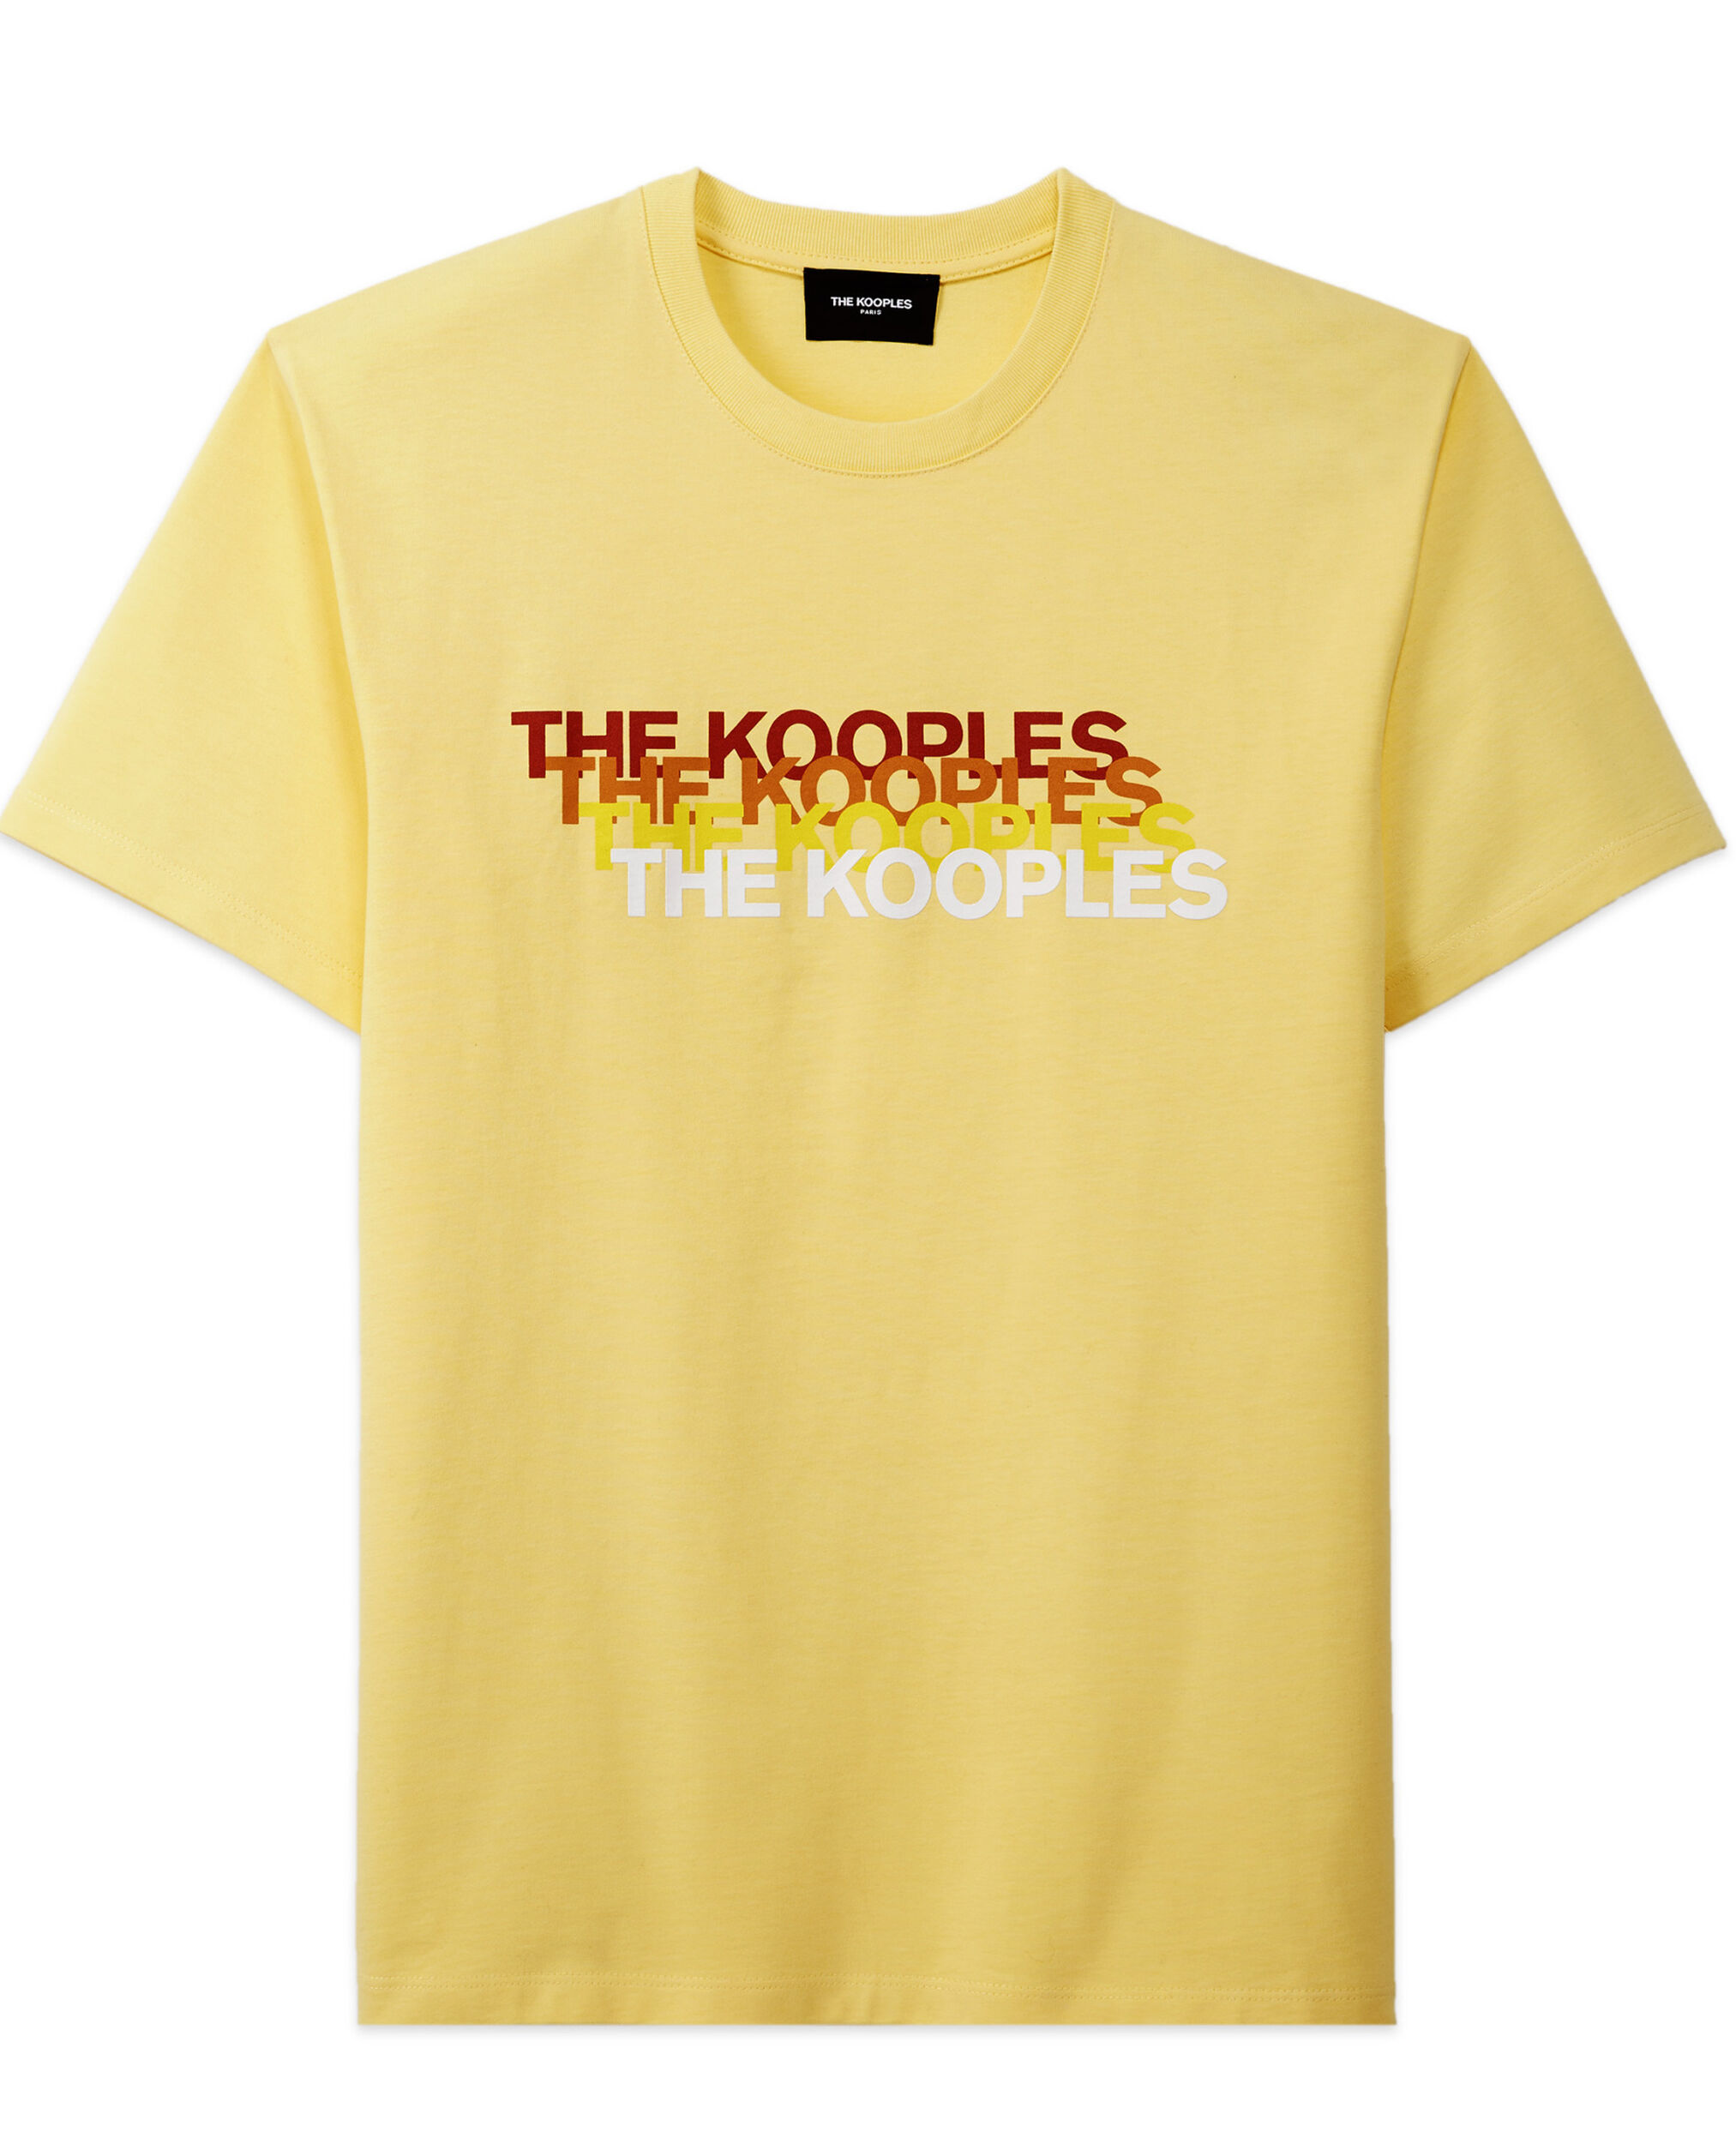 T-shirt jaune logo The Kooples contrasté, YELLOW, hi-res image number null